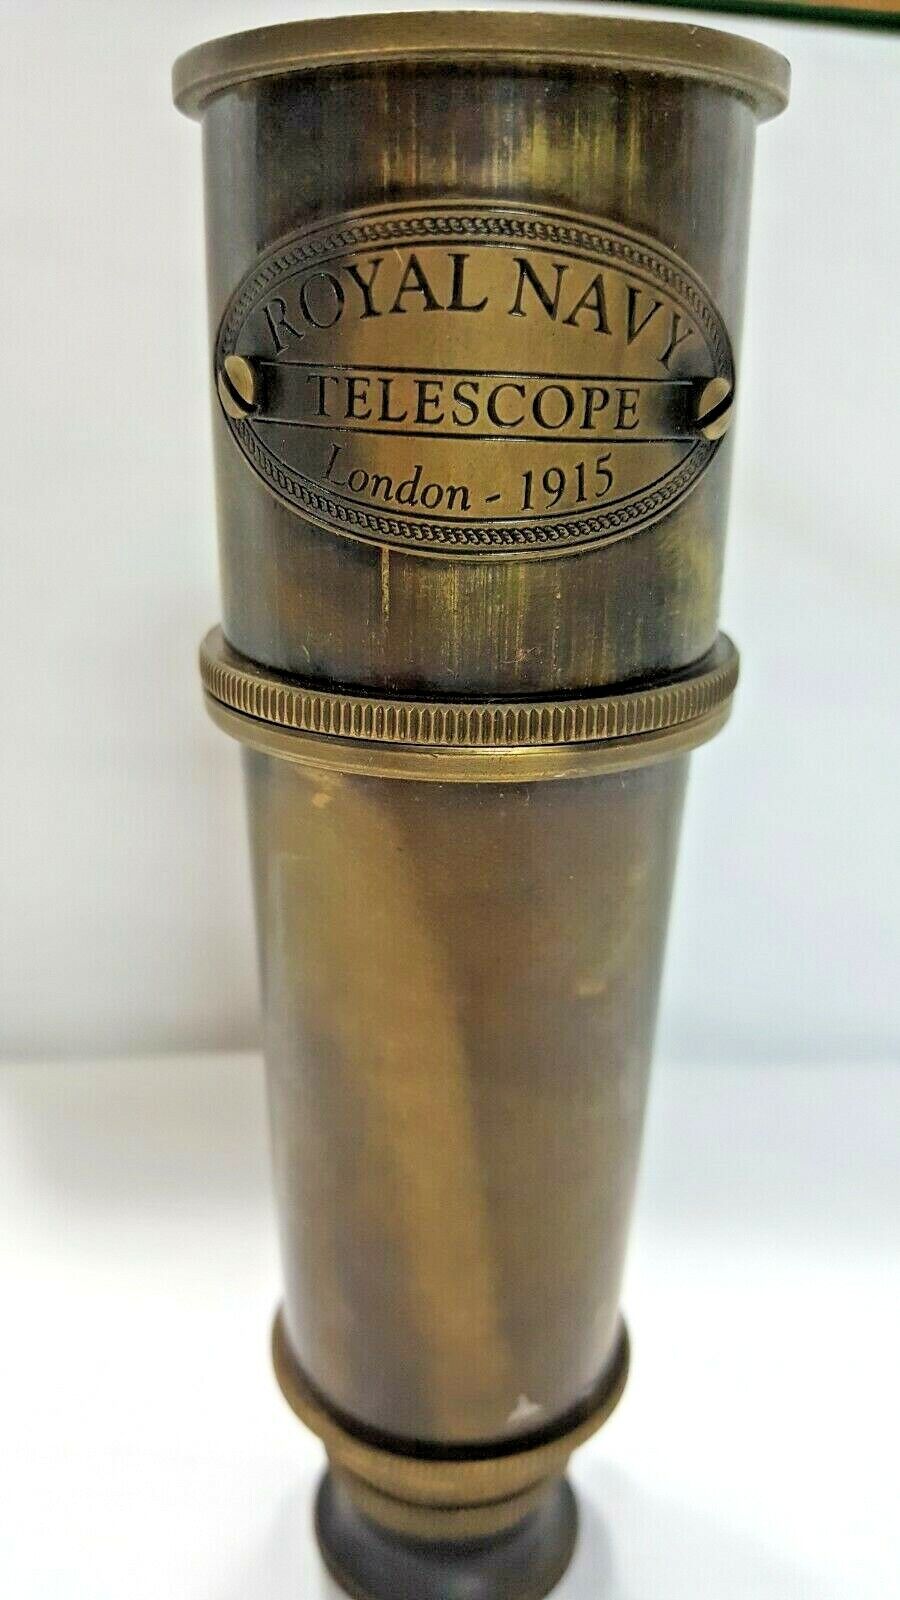 ROYAL NAVY LONDON 1915 Brass Telescope - A. Maspoli London with